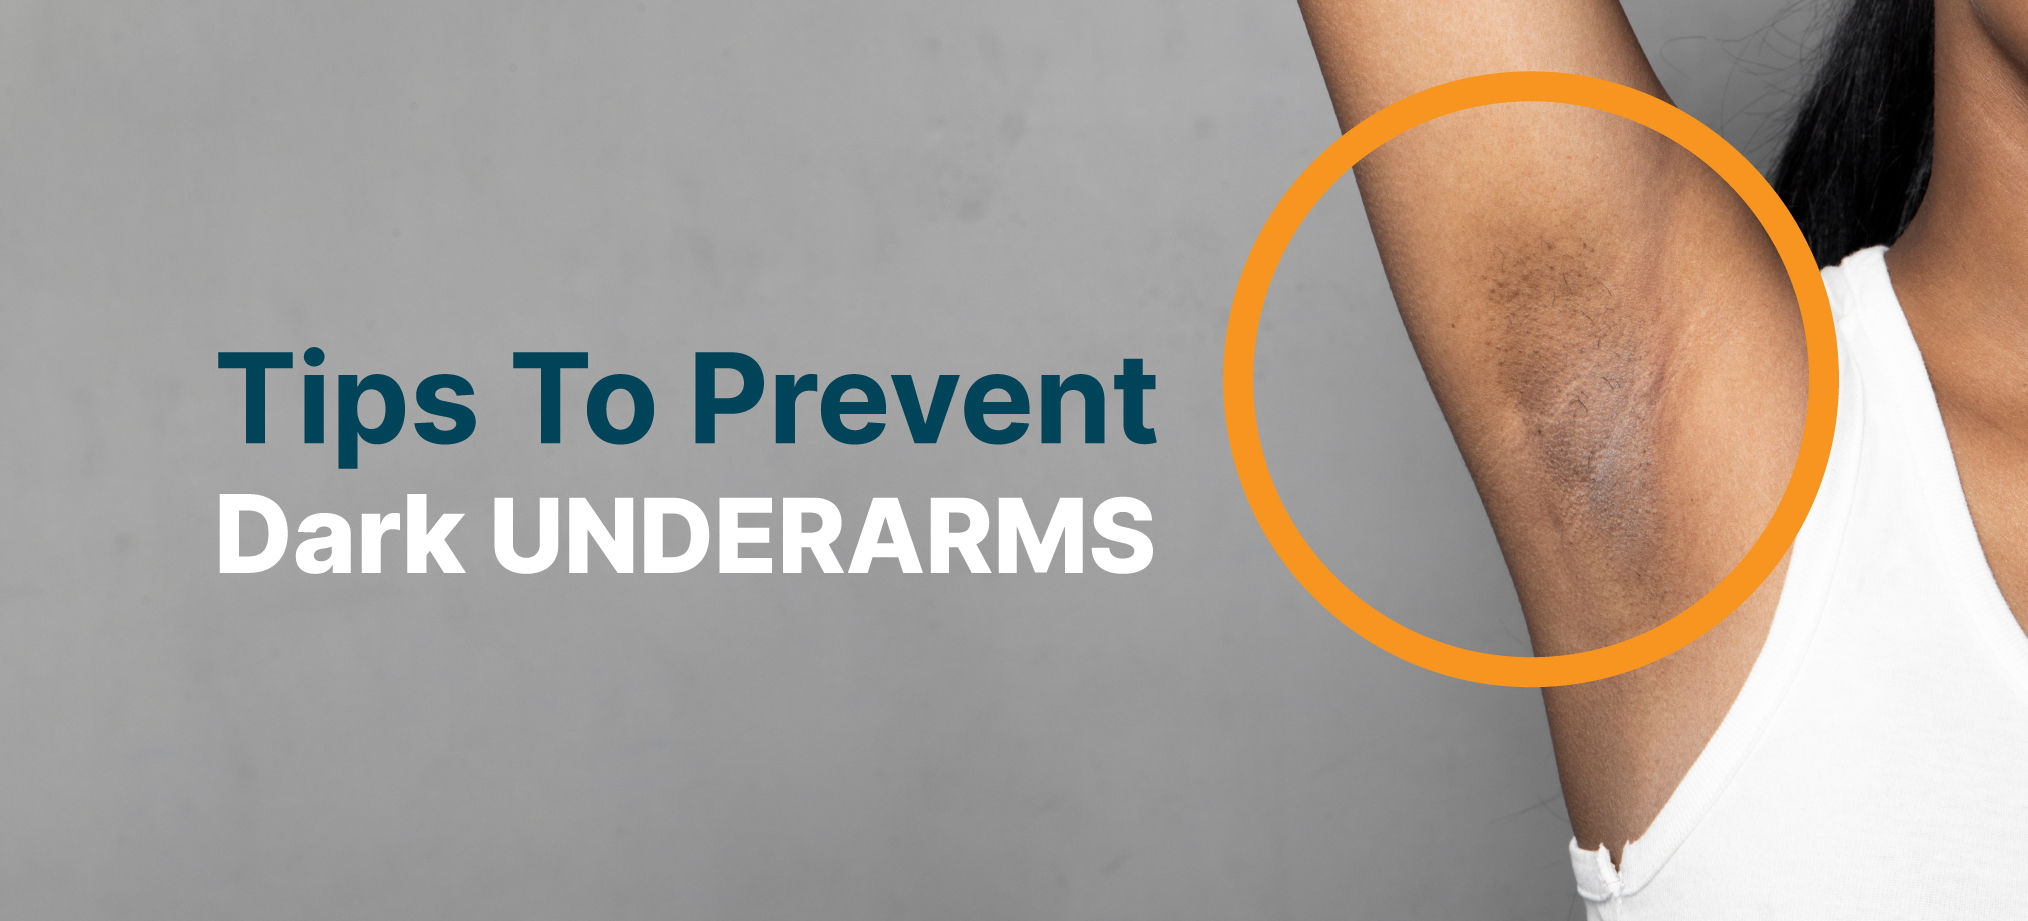 Skin Concern] Sudden darkening of the underarms happen to anyone